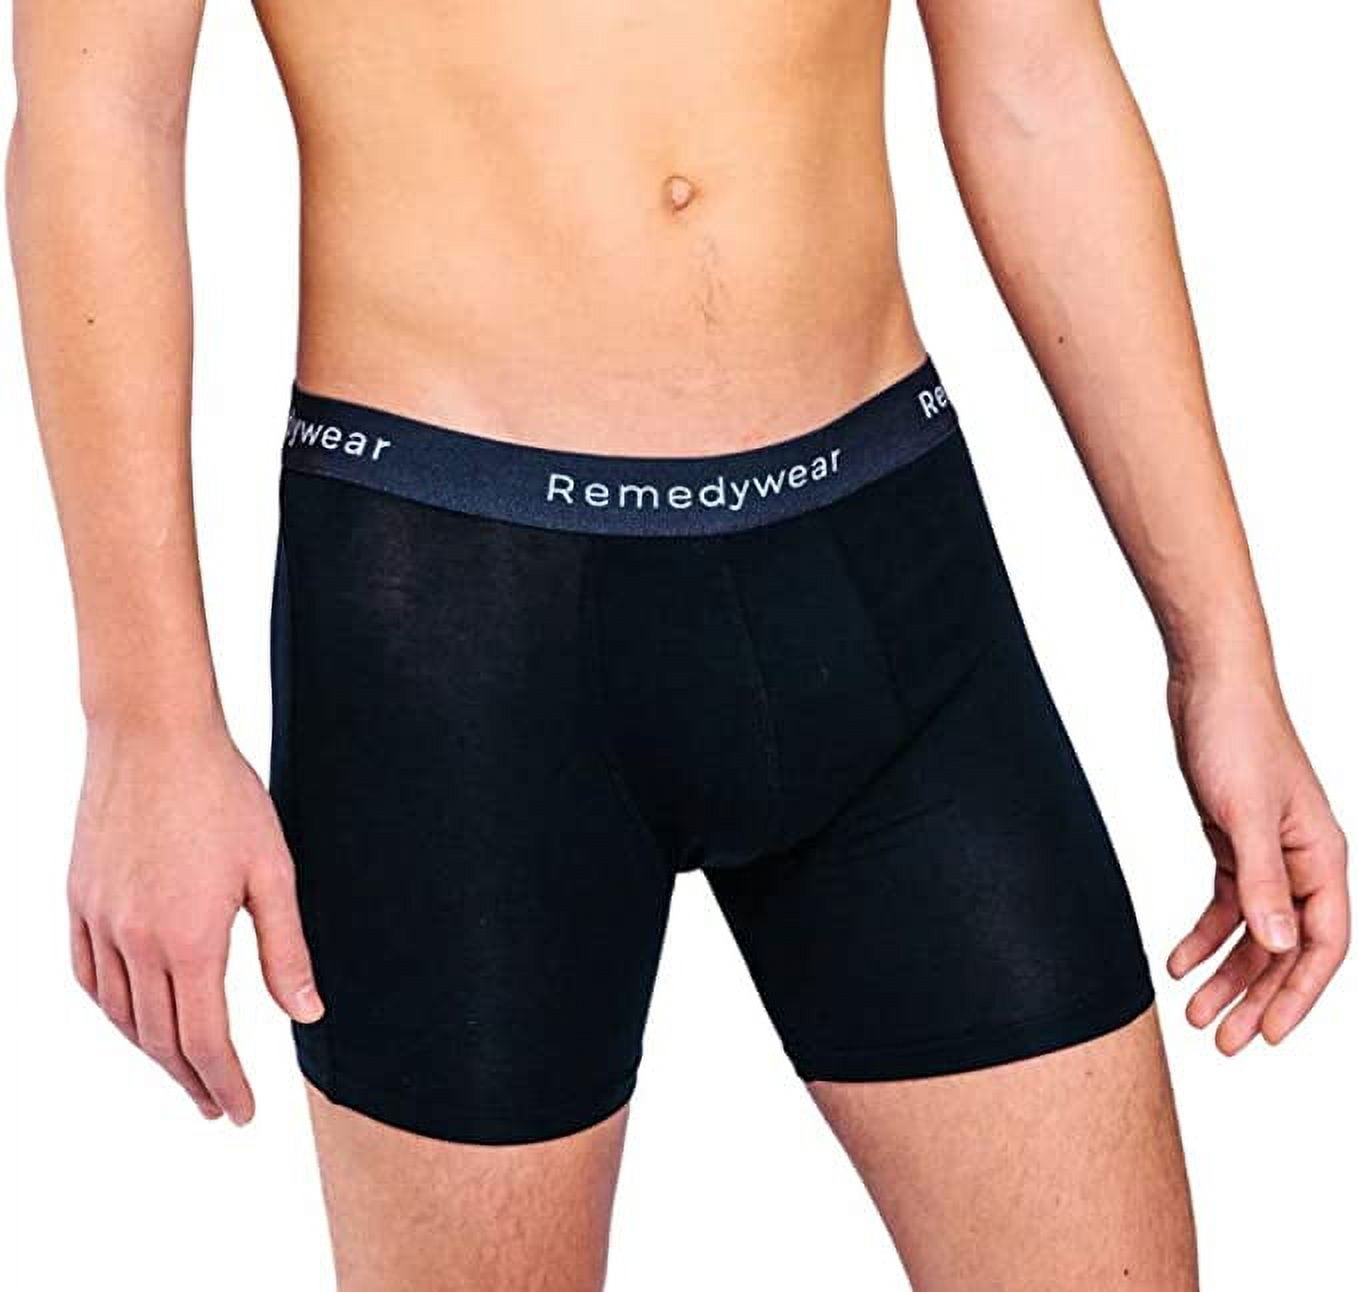 Remedywear Men's Boxer Briefs, Jock Itch, Allergy, Eczema Relief Underwear  with Soothing Fibers, TENCEL and Zinc (Black, Medium)